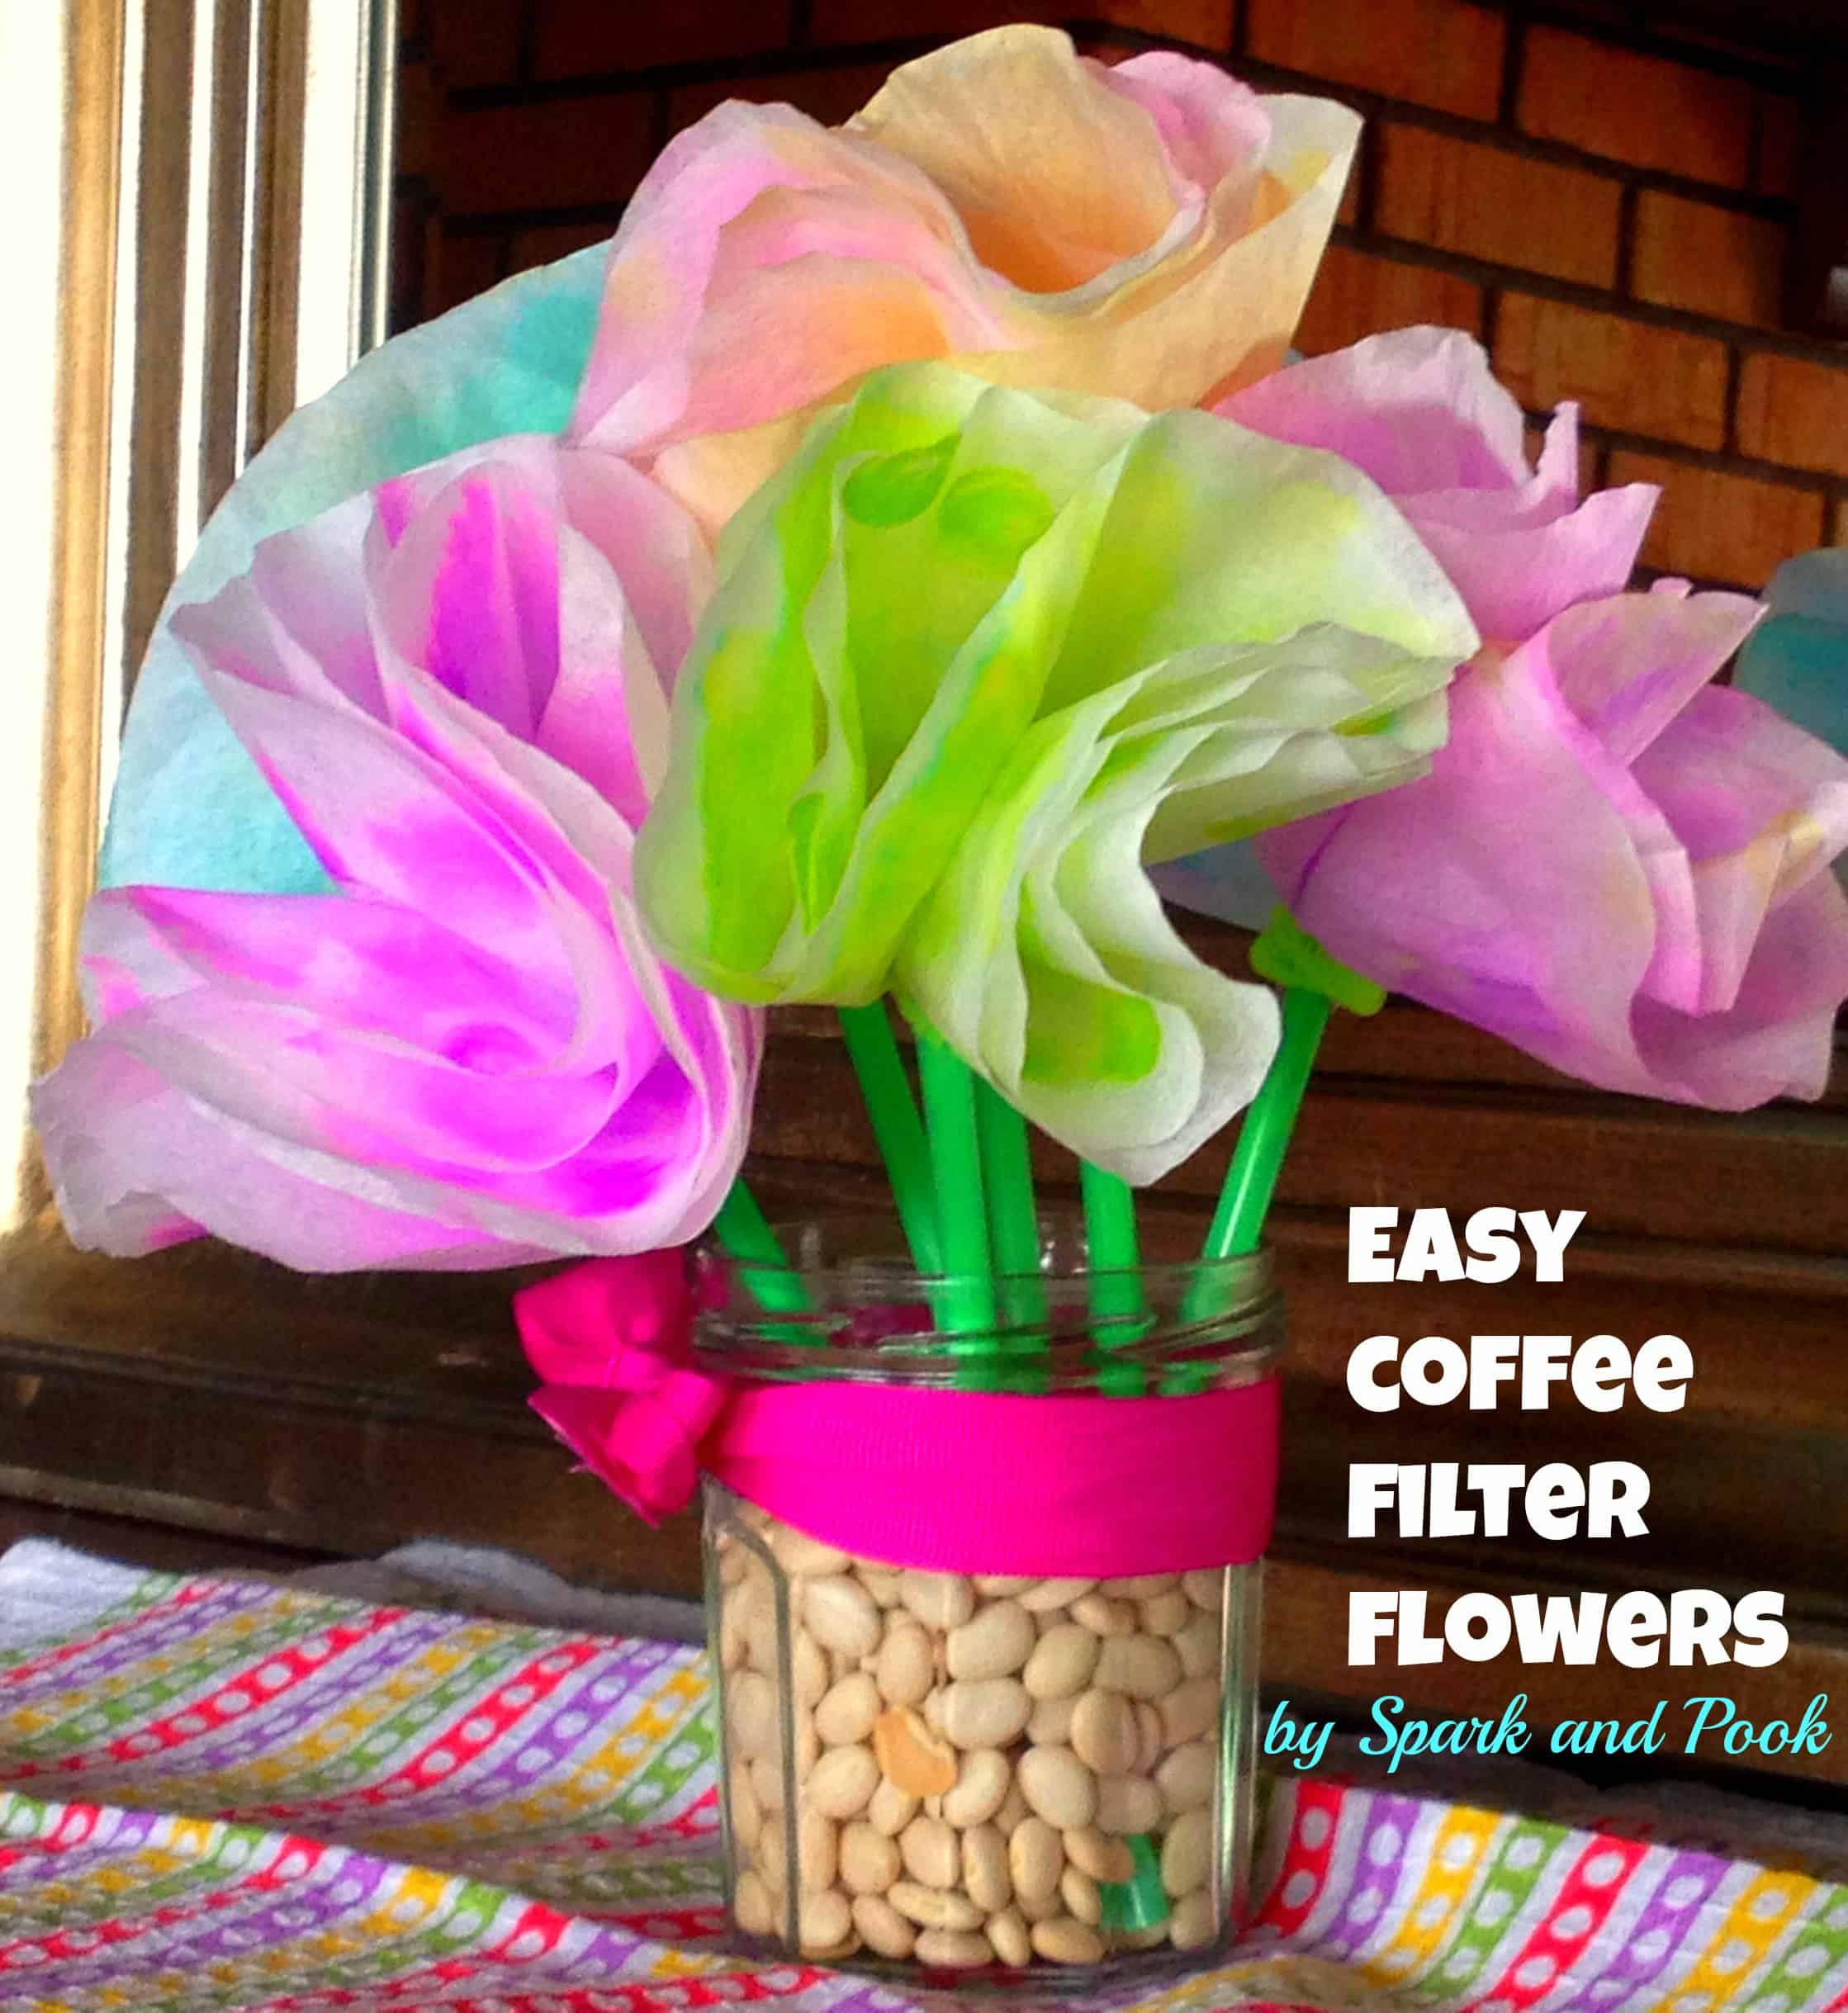 Easy coffee filter flowers